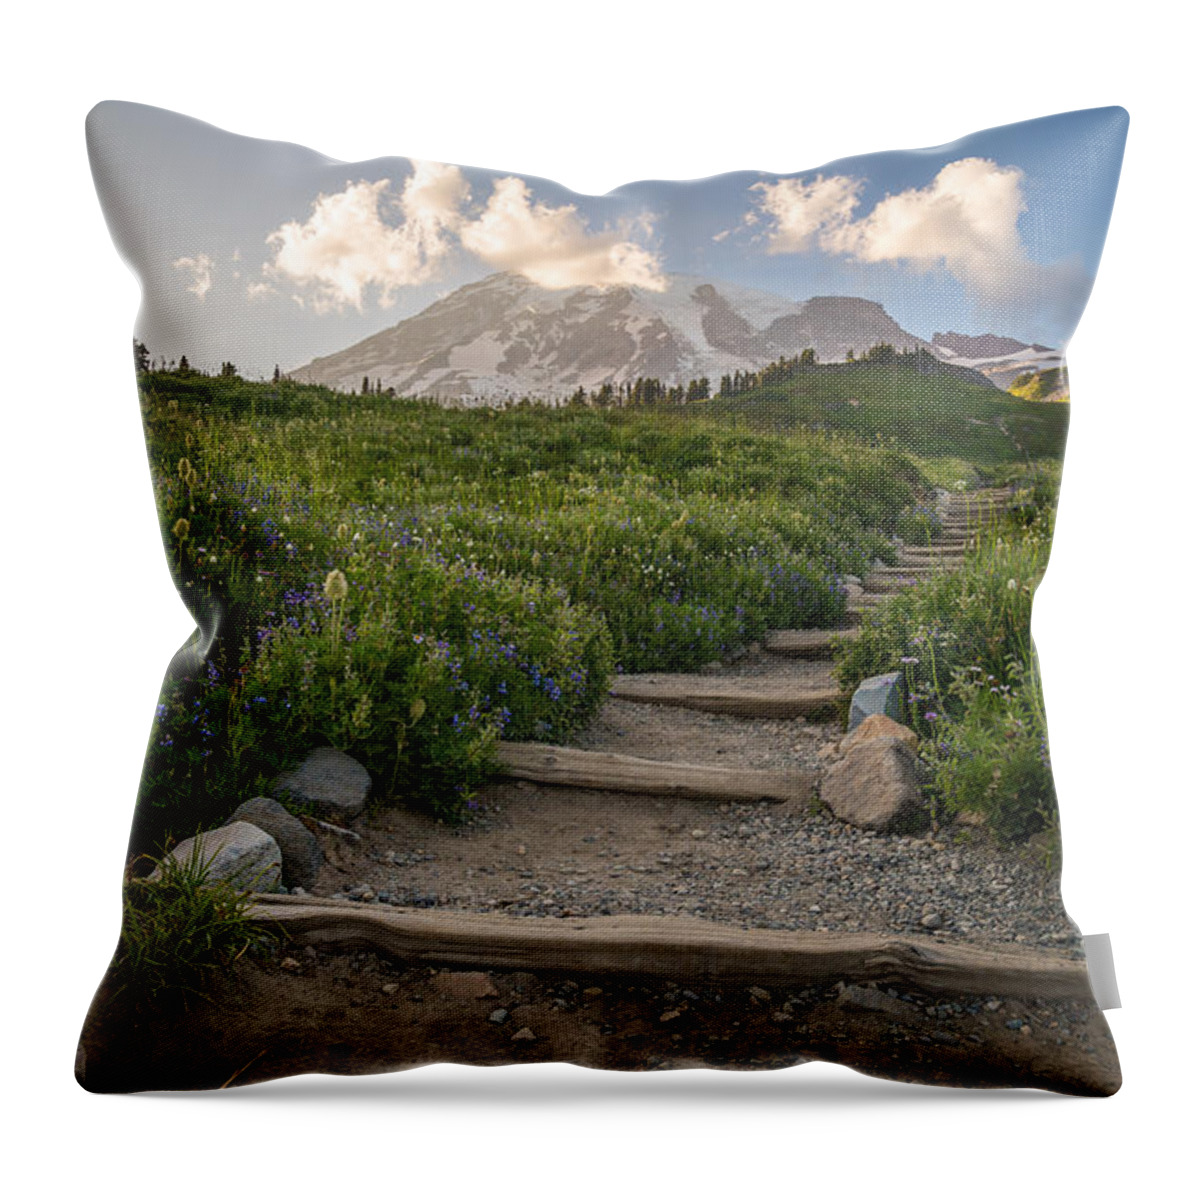 Mount Rainier Throw Pillow featuring the photograph The Next Step by Kristopher Schoenleber